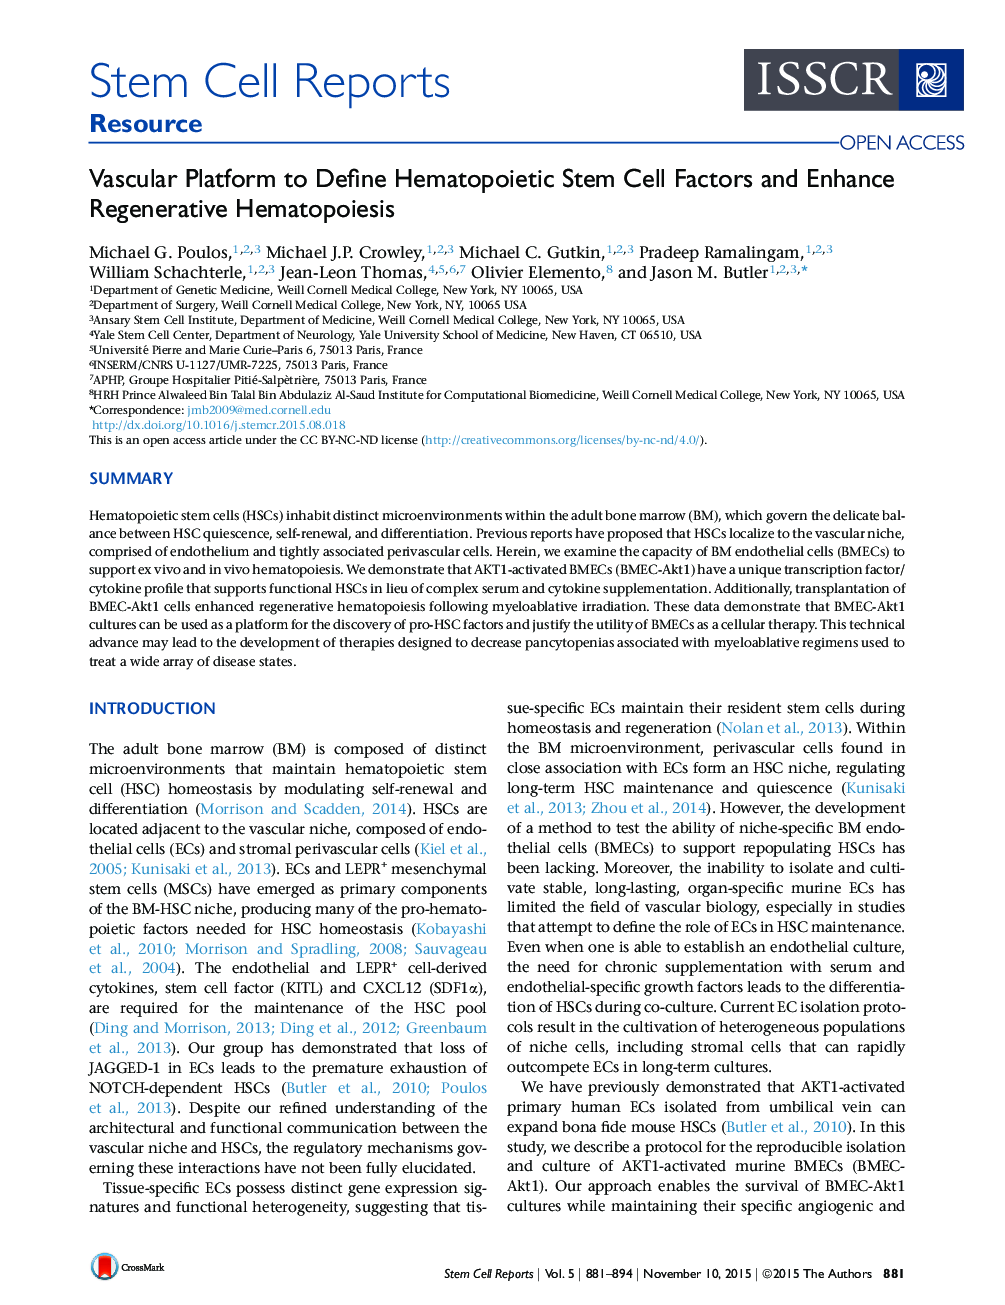 Vascular Platform to Define Hematopoietic Stem Cell Factors and Enhance Regenerative Hematopoiesis 